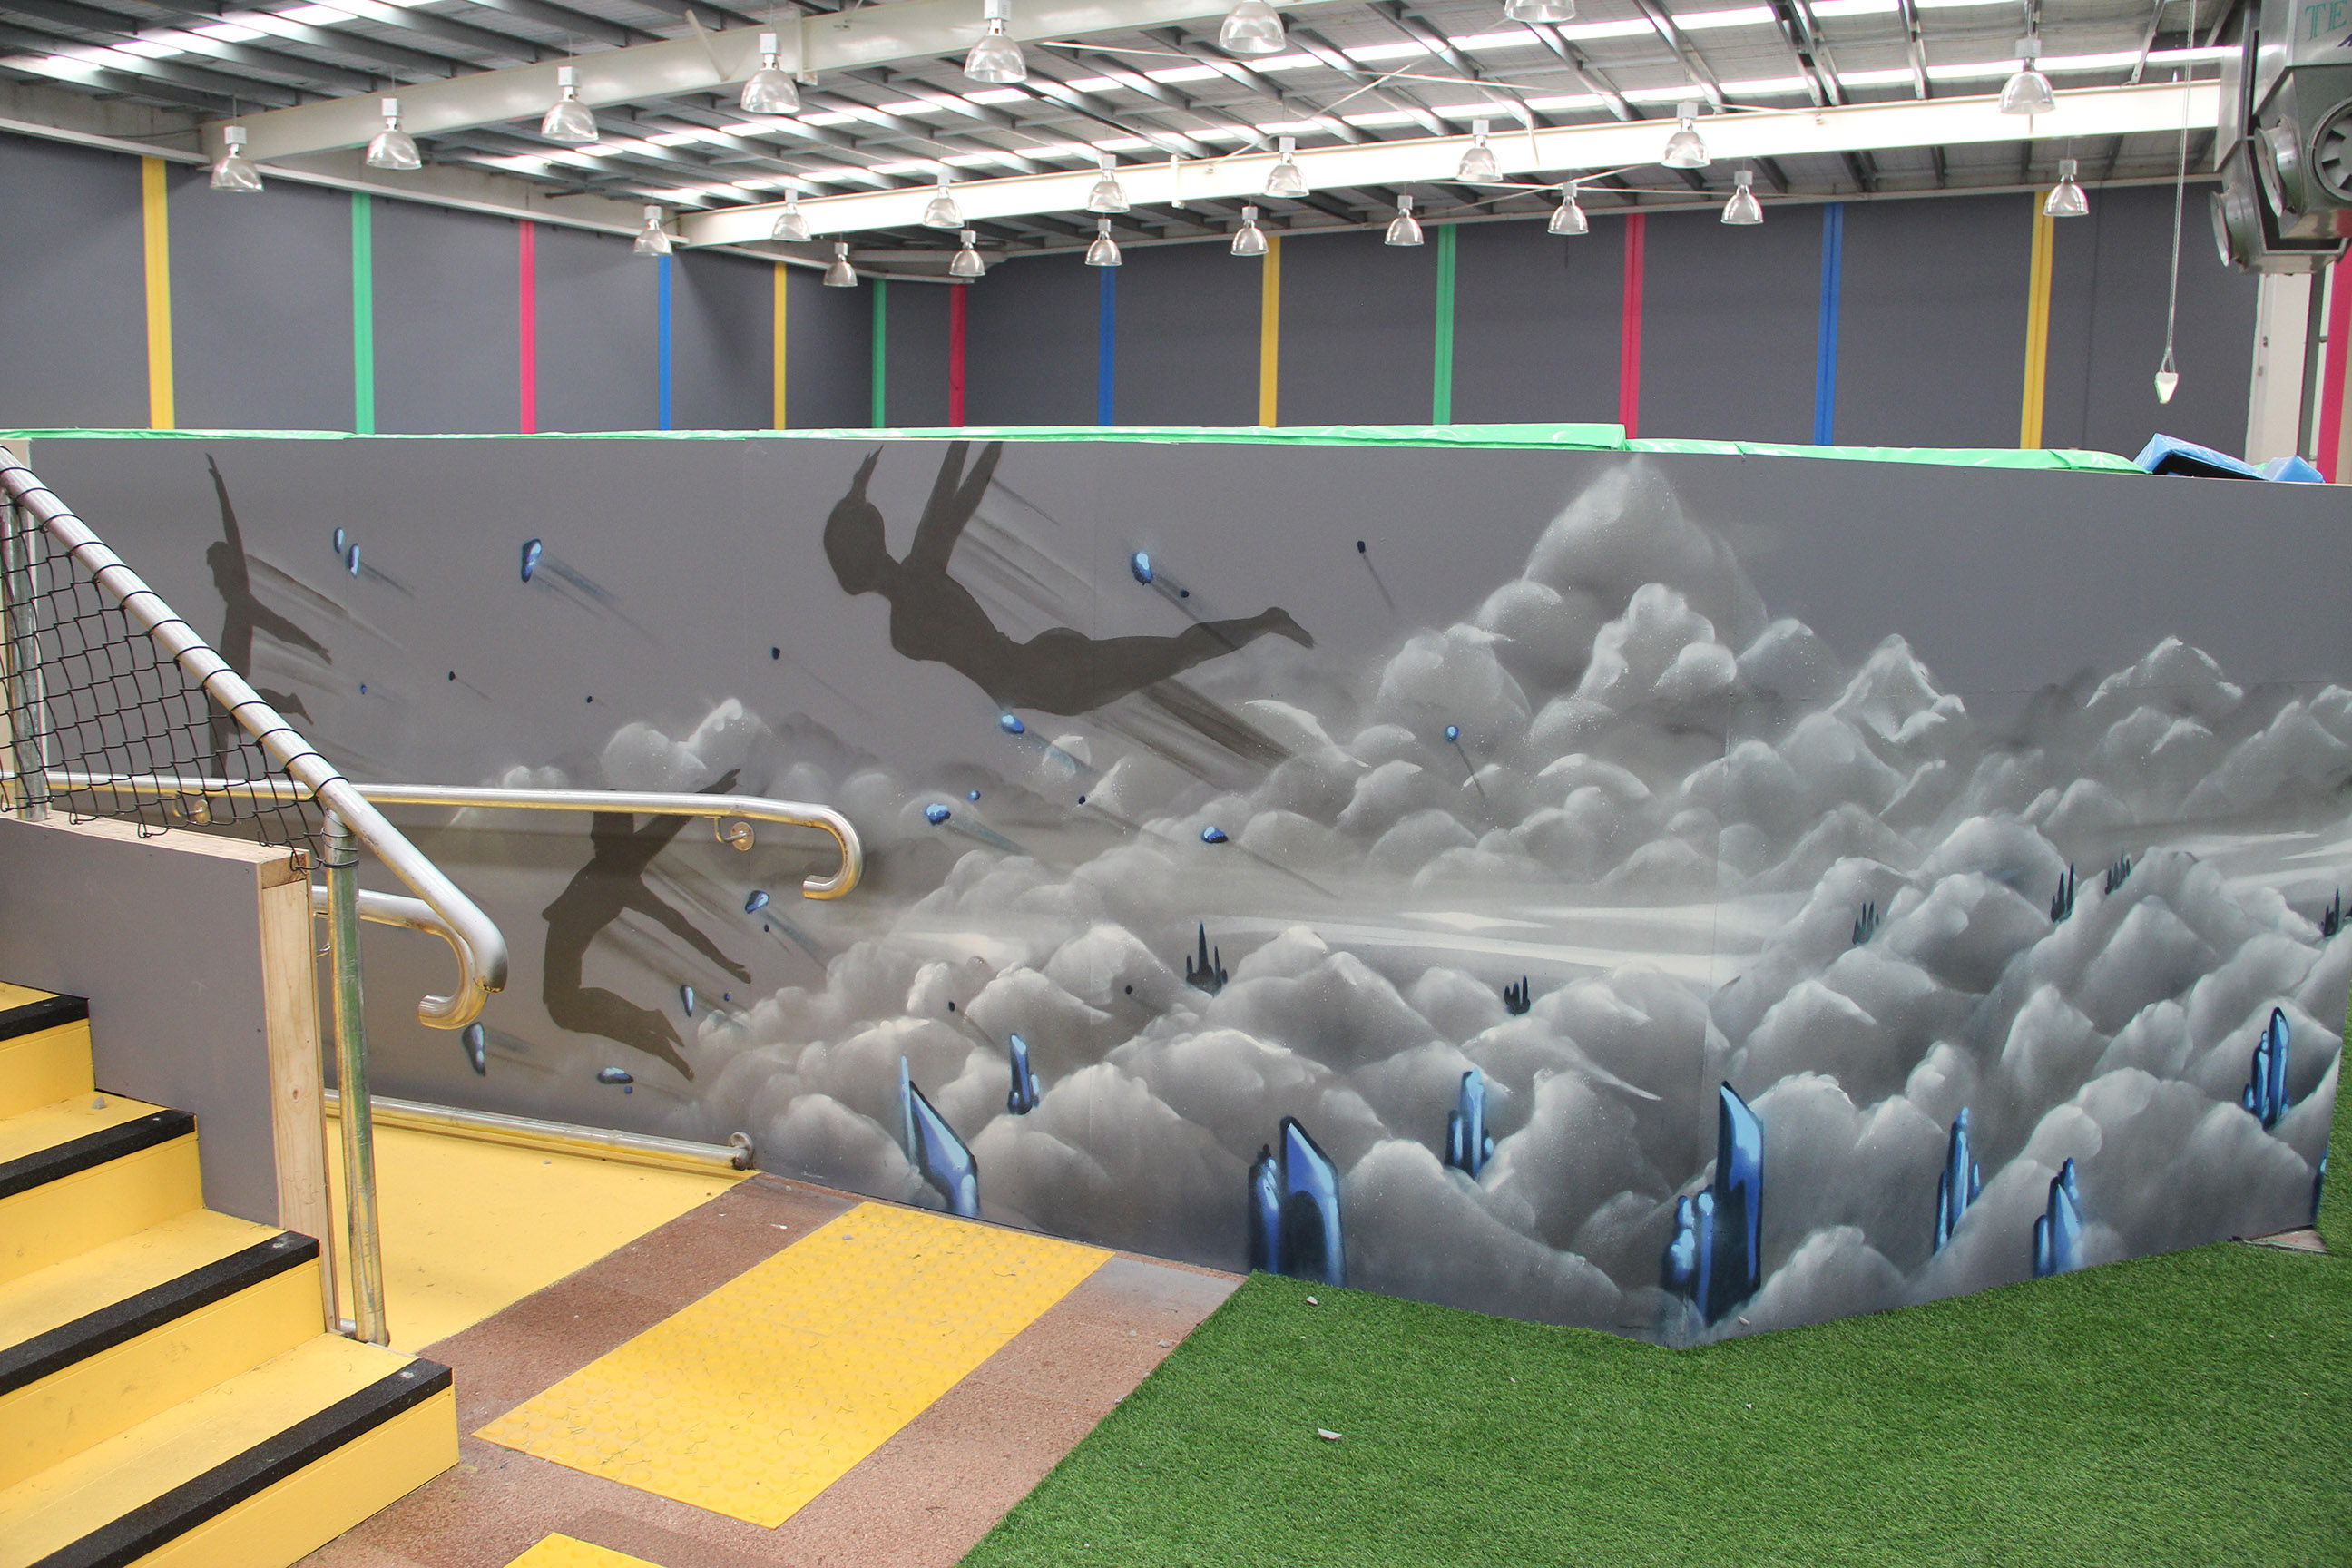 Airborn trampoline park graffiti